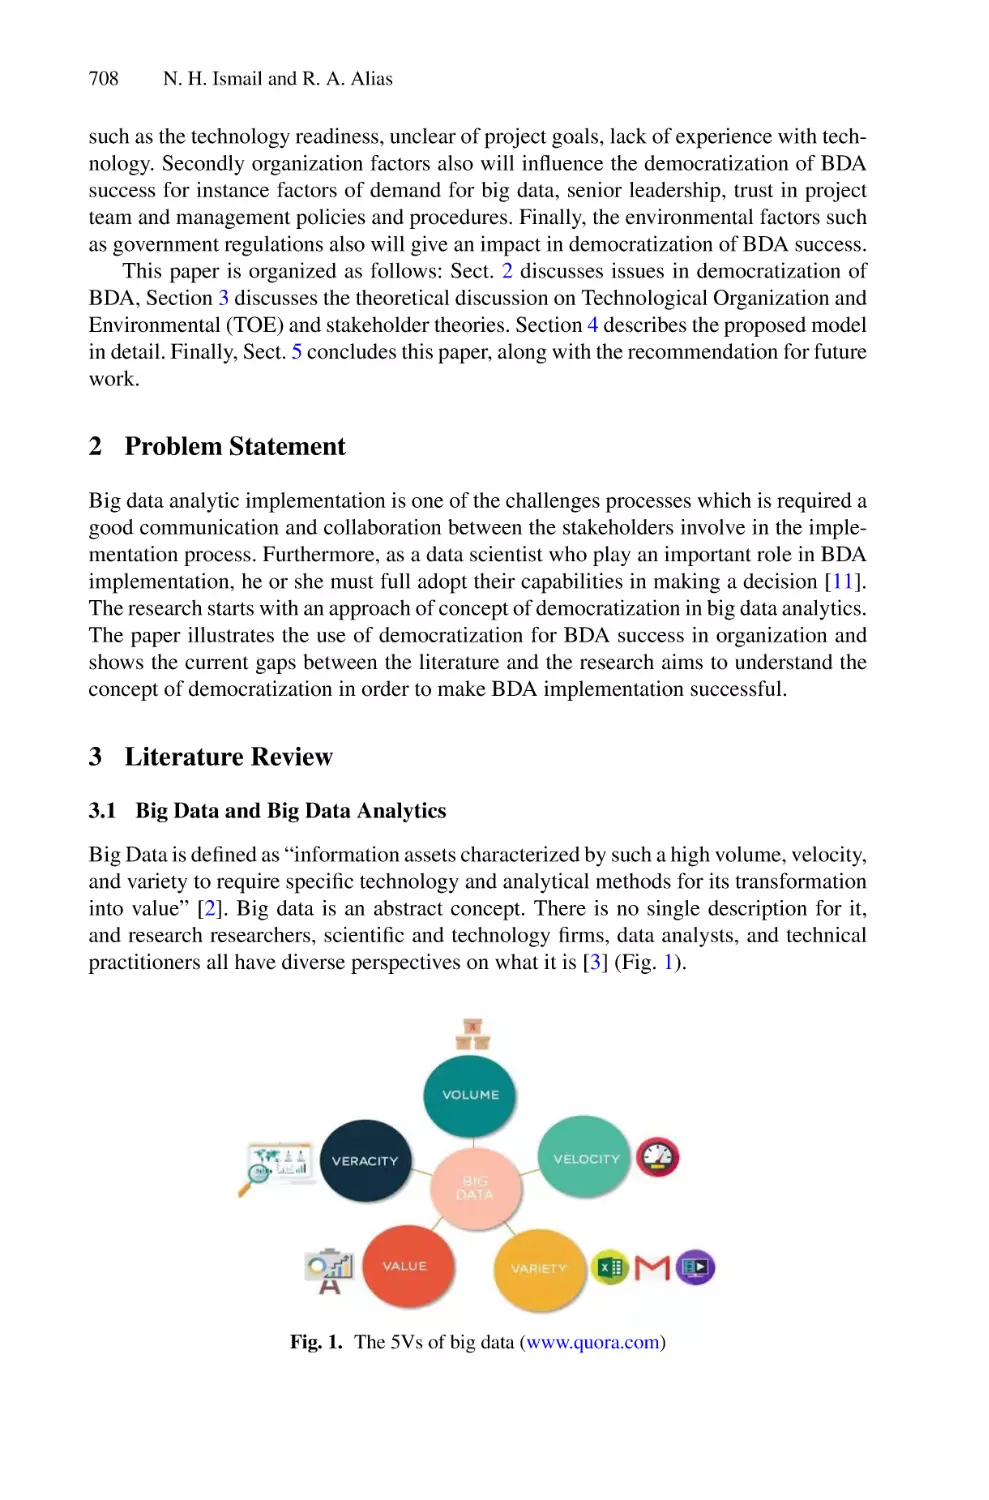 2 Problem Statement
3 Literature Review
3.1 Big Data and Big Data Analytics